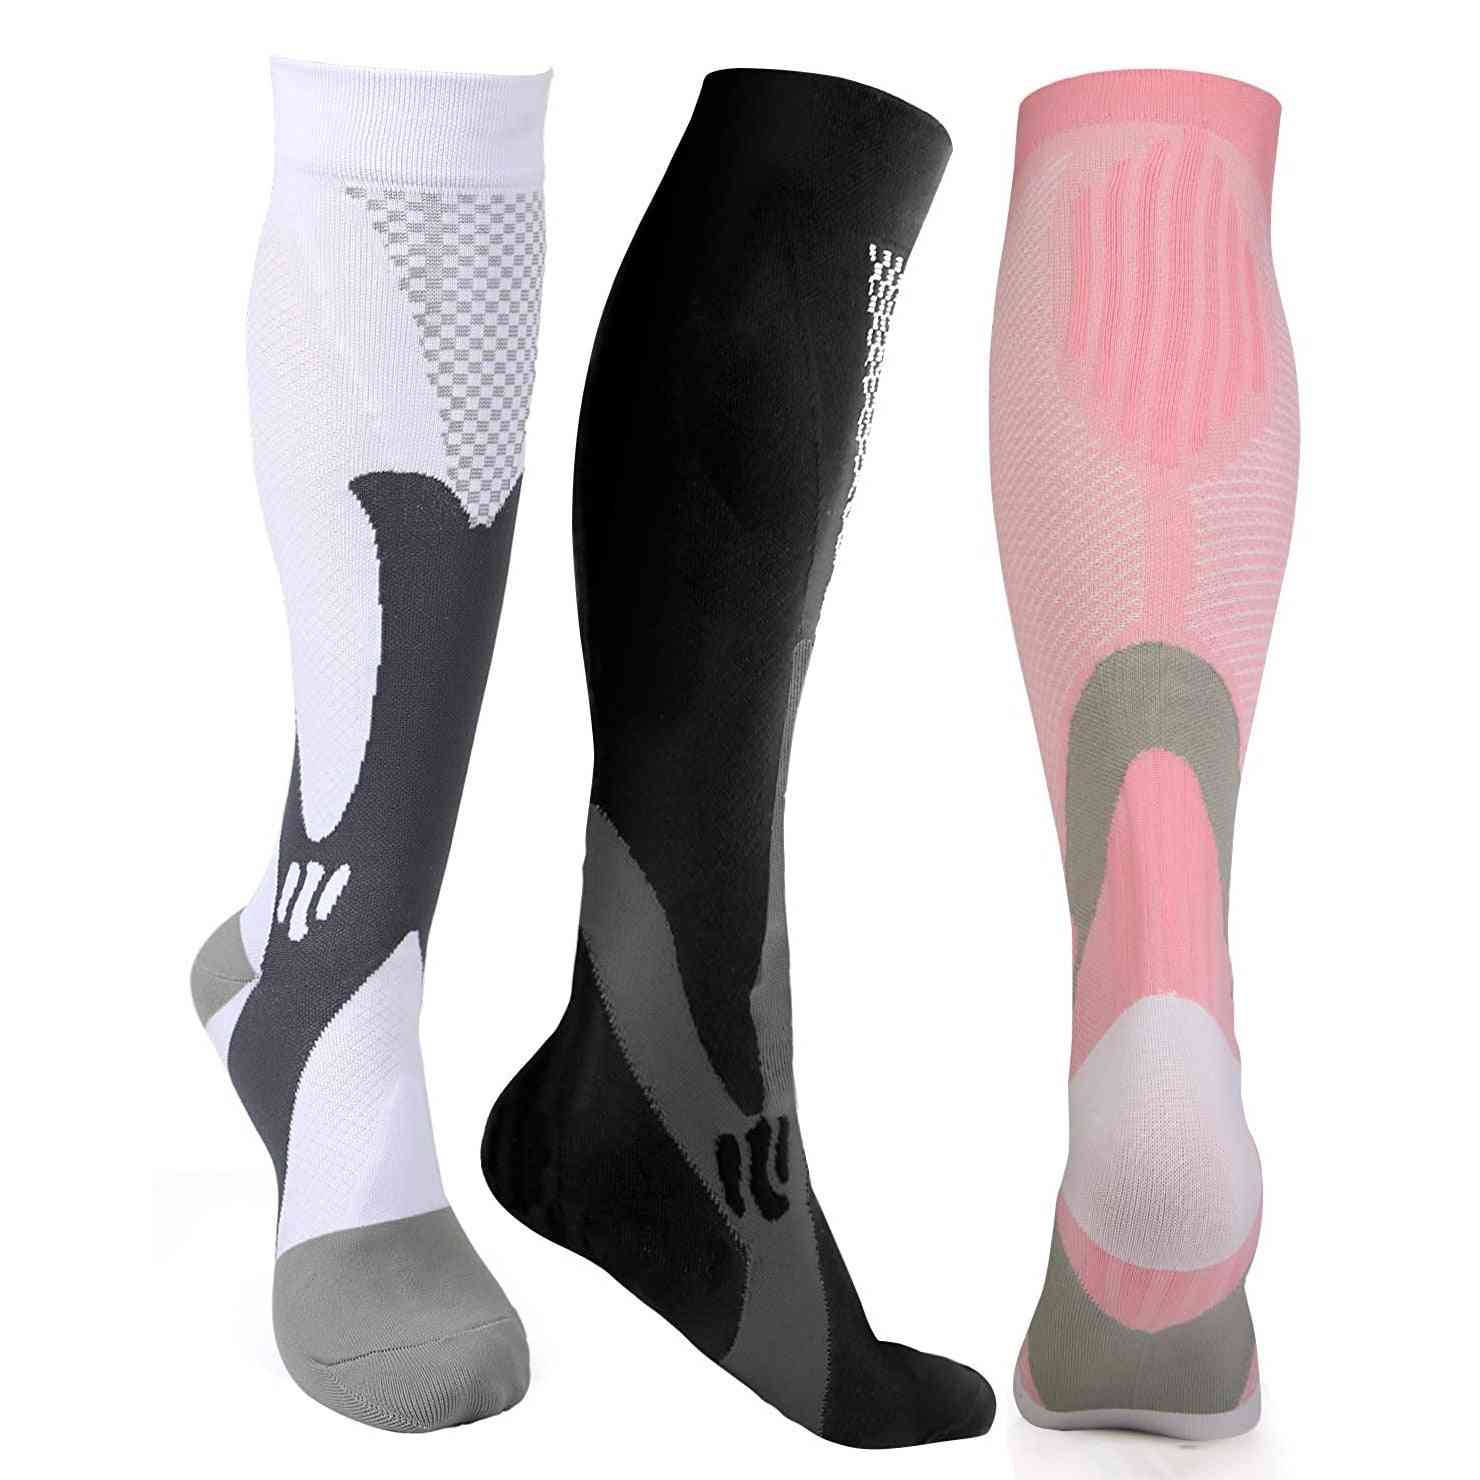 Brothock Compression Socks For Men Women Medical Nurses - Athletic Sport Stockings